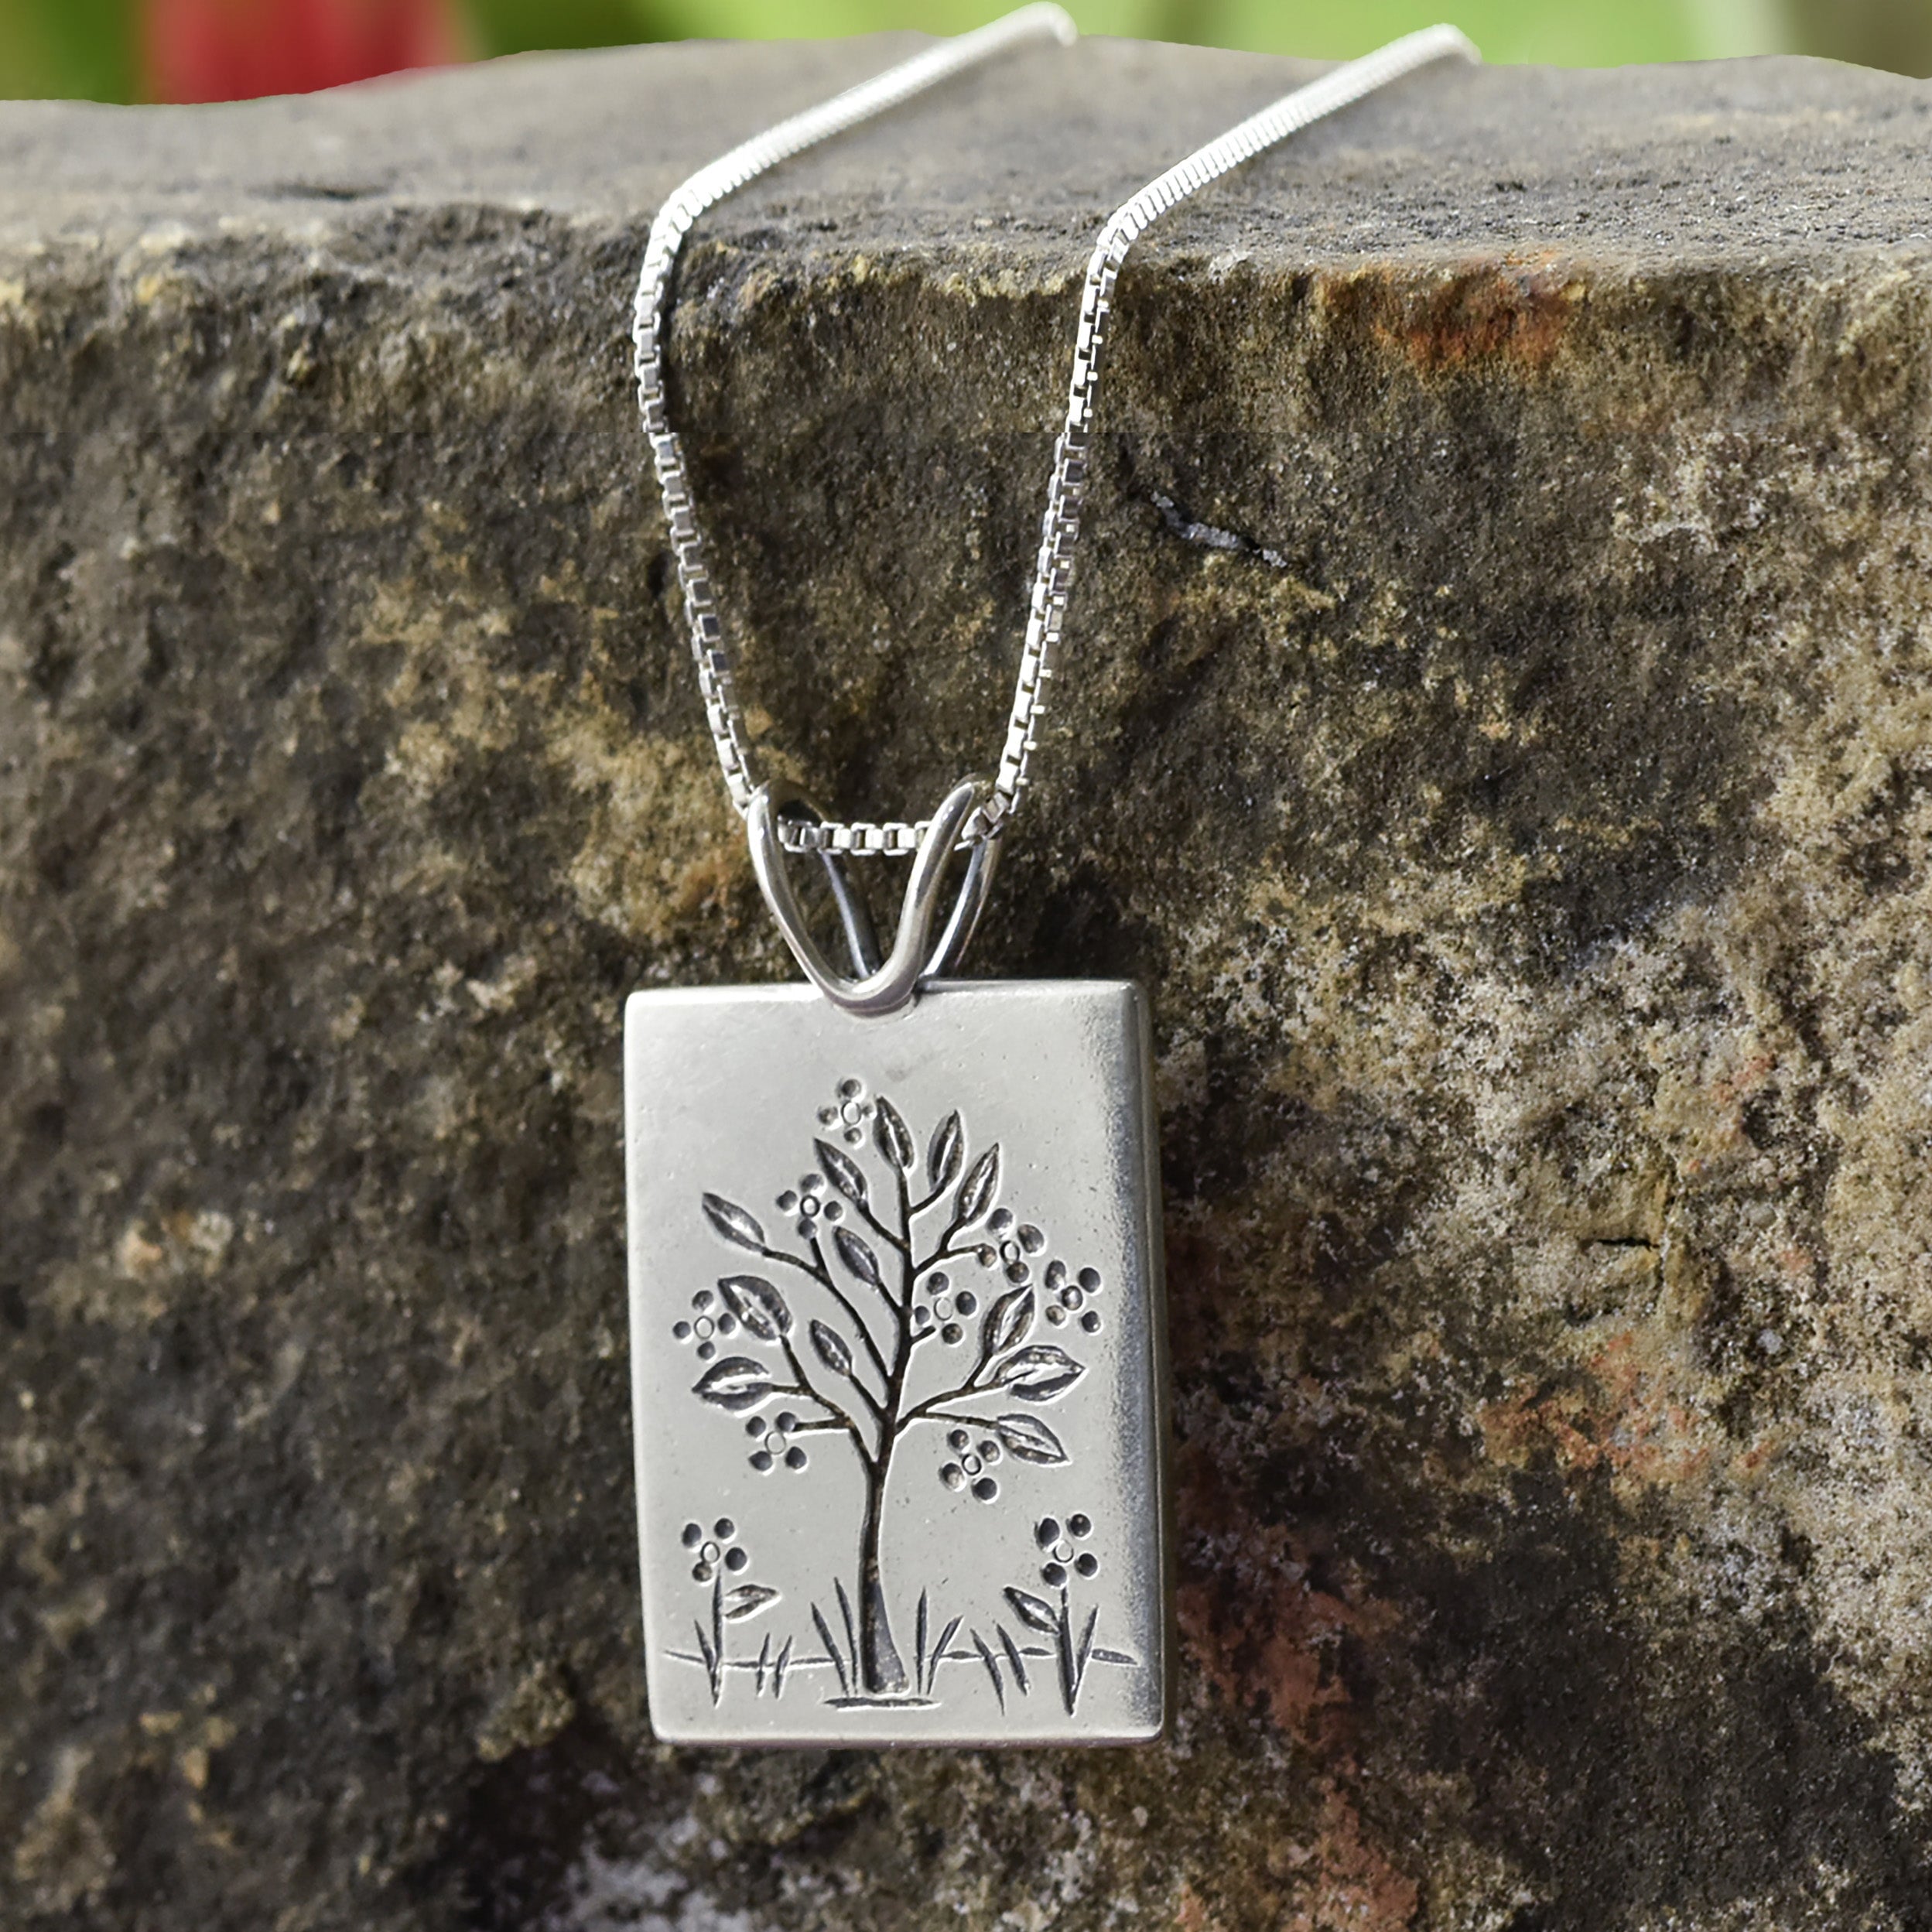 Reversible Equinox Tree Pendant - Silver Pendant   7096 - handmade by Beth Millner Jewelry